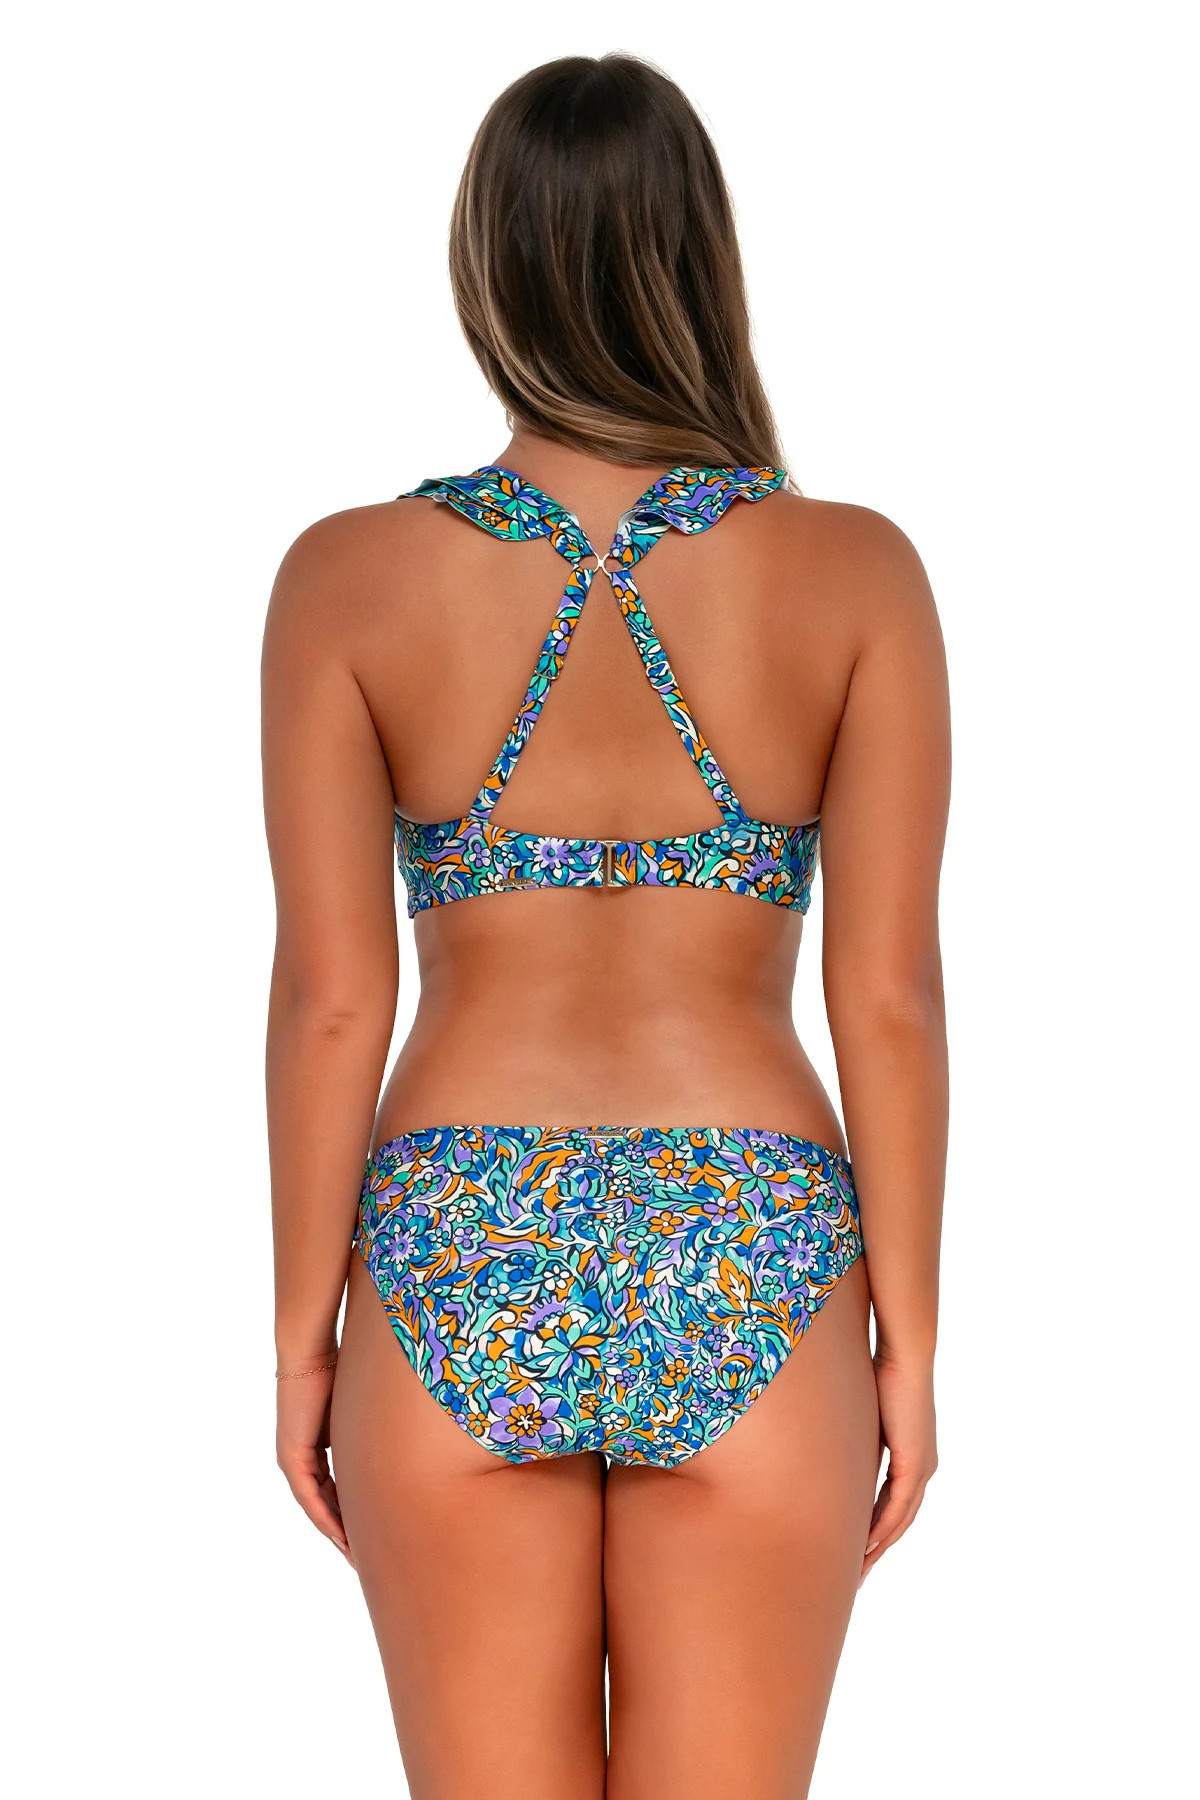 PANSY FIELDS Willa Wireless Bralette Bikini Top (D+ Cup) image number 3